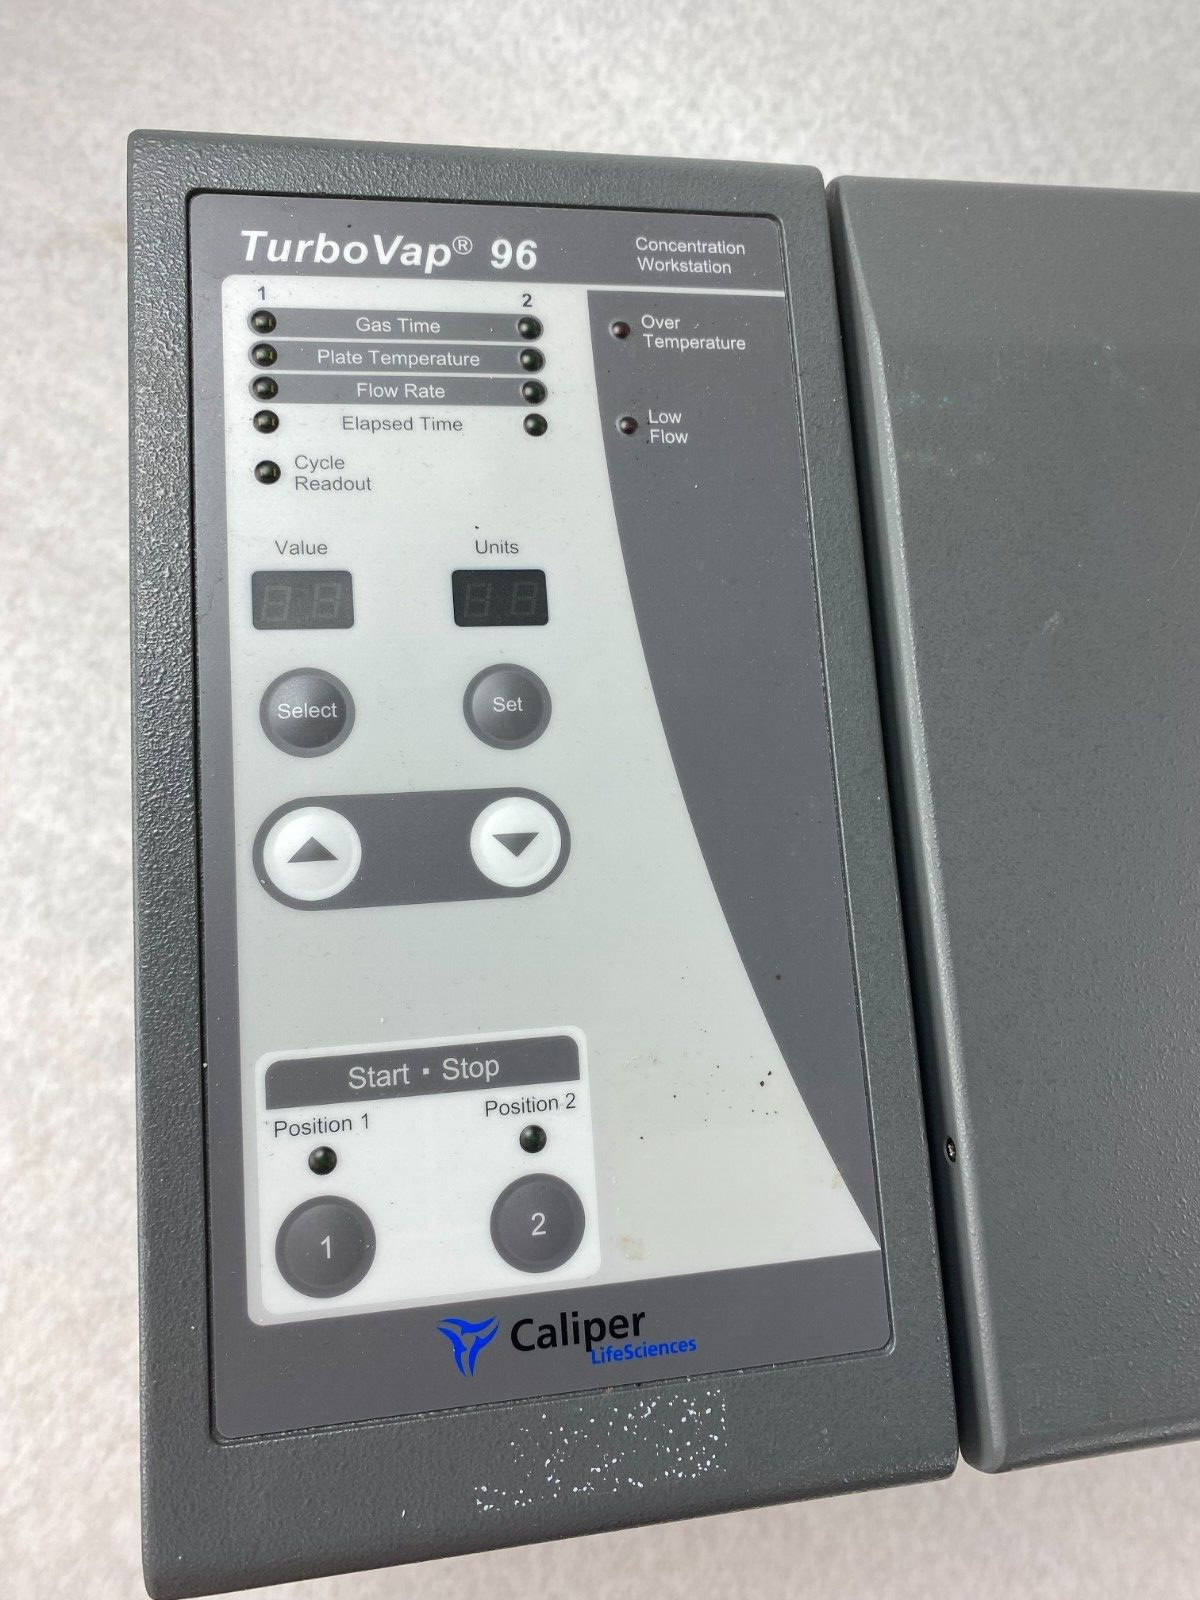 Caliper LifeSciences TurboVap 96 PN 103263/0 Concentration Workstation